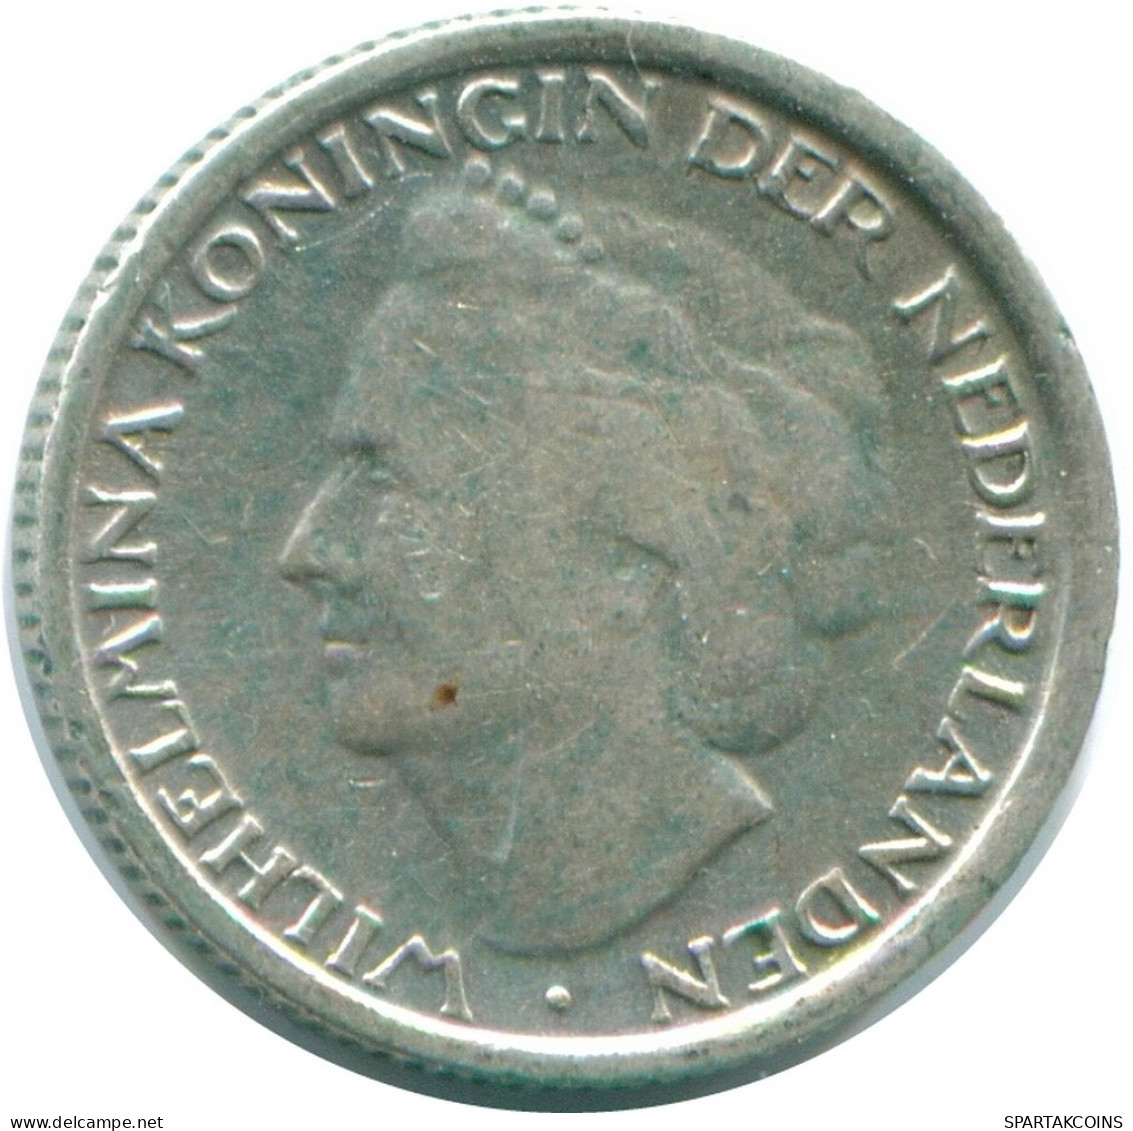 1/10 GULDEN 1948 CURACAO Netherlands SILVER Colonial Coin #NL11957.3.U.A - Curaçao